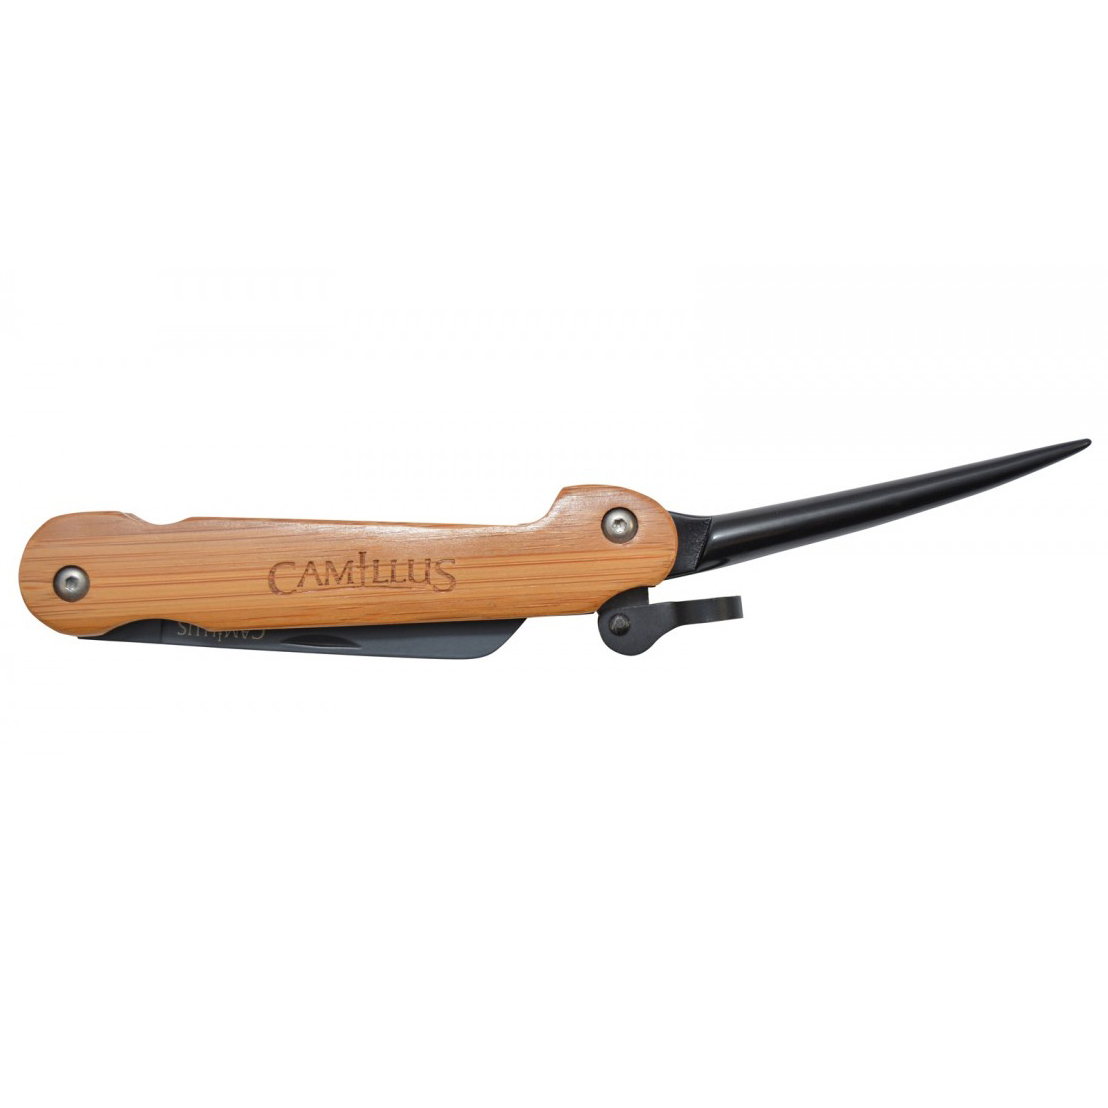 Нож складной Camillus Nautical Sailing Knife with Marlin Spike, Carbonitride Titanium® Aus-8 Steel, Bamboo Handles 6.4 см. - фото 4